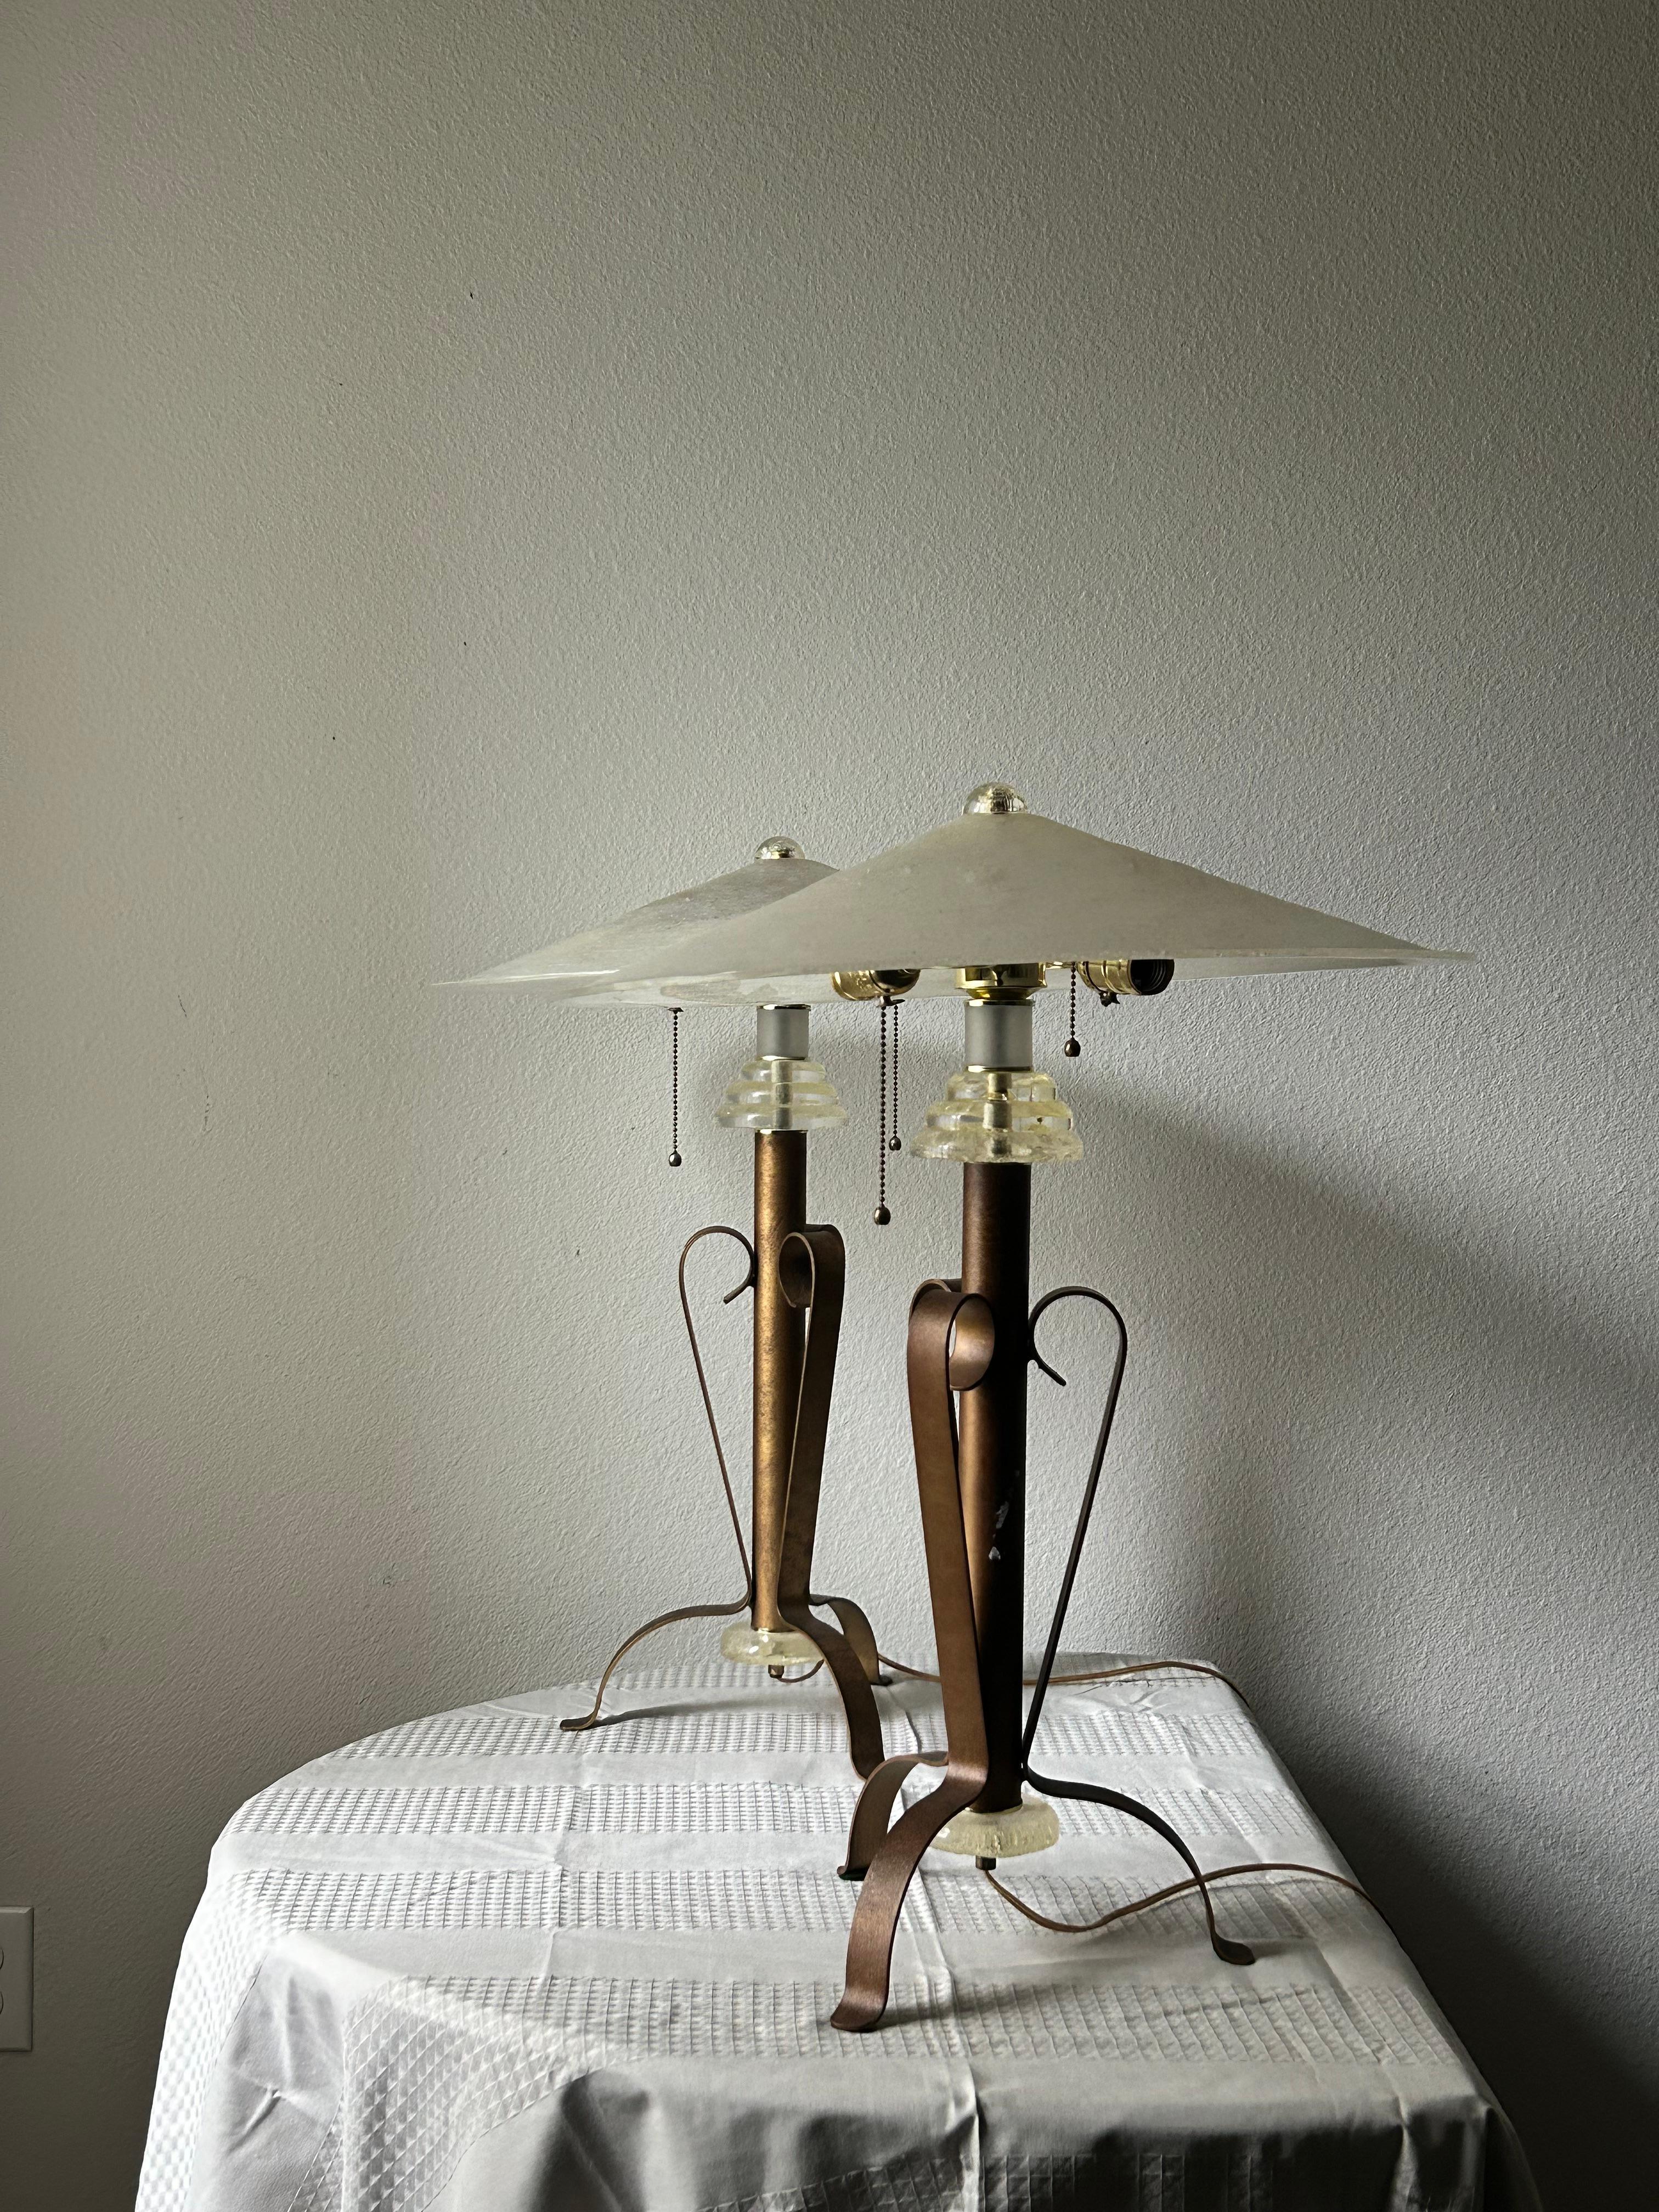 An artful pair regency style table lamps. 
27 